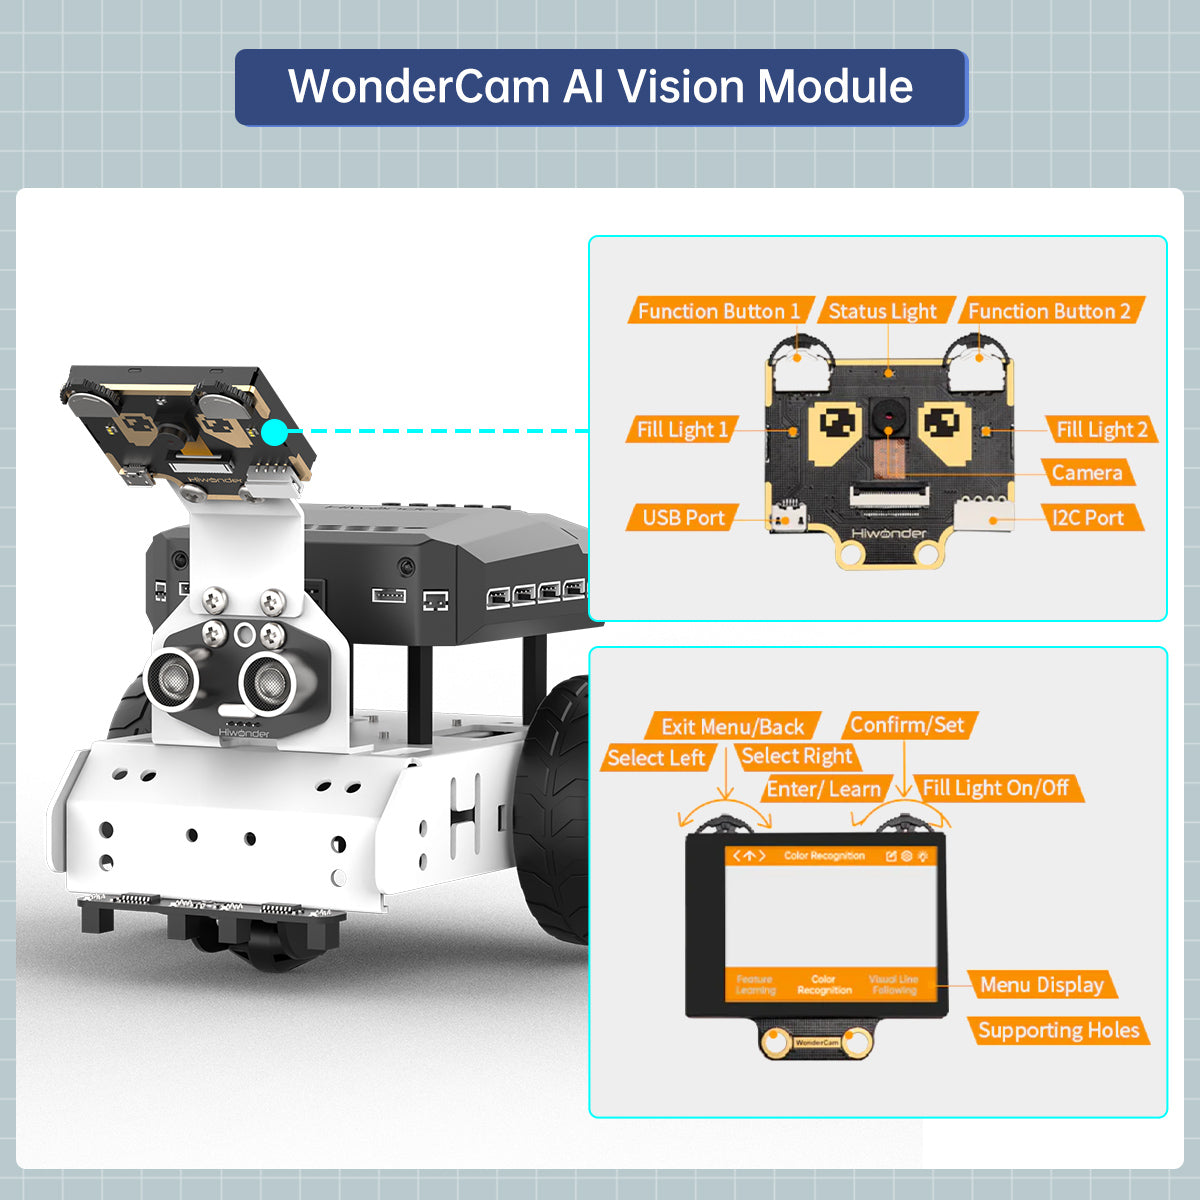 Hiwonder AiNova Intelligent Vision Robot Car Graphical Python/ Scratch Program